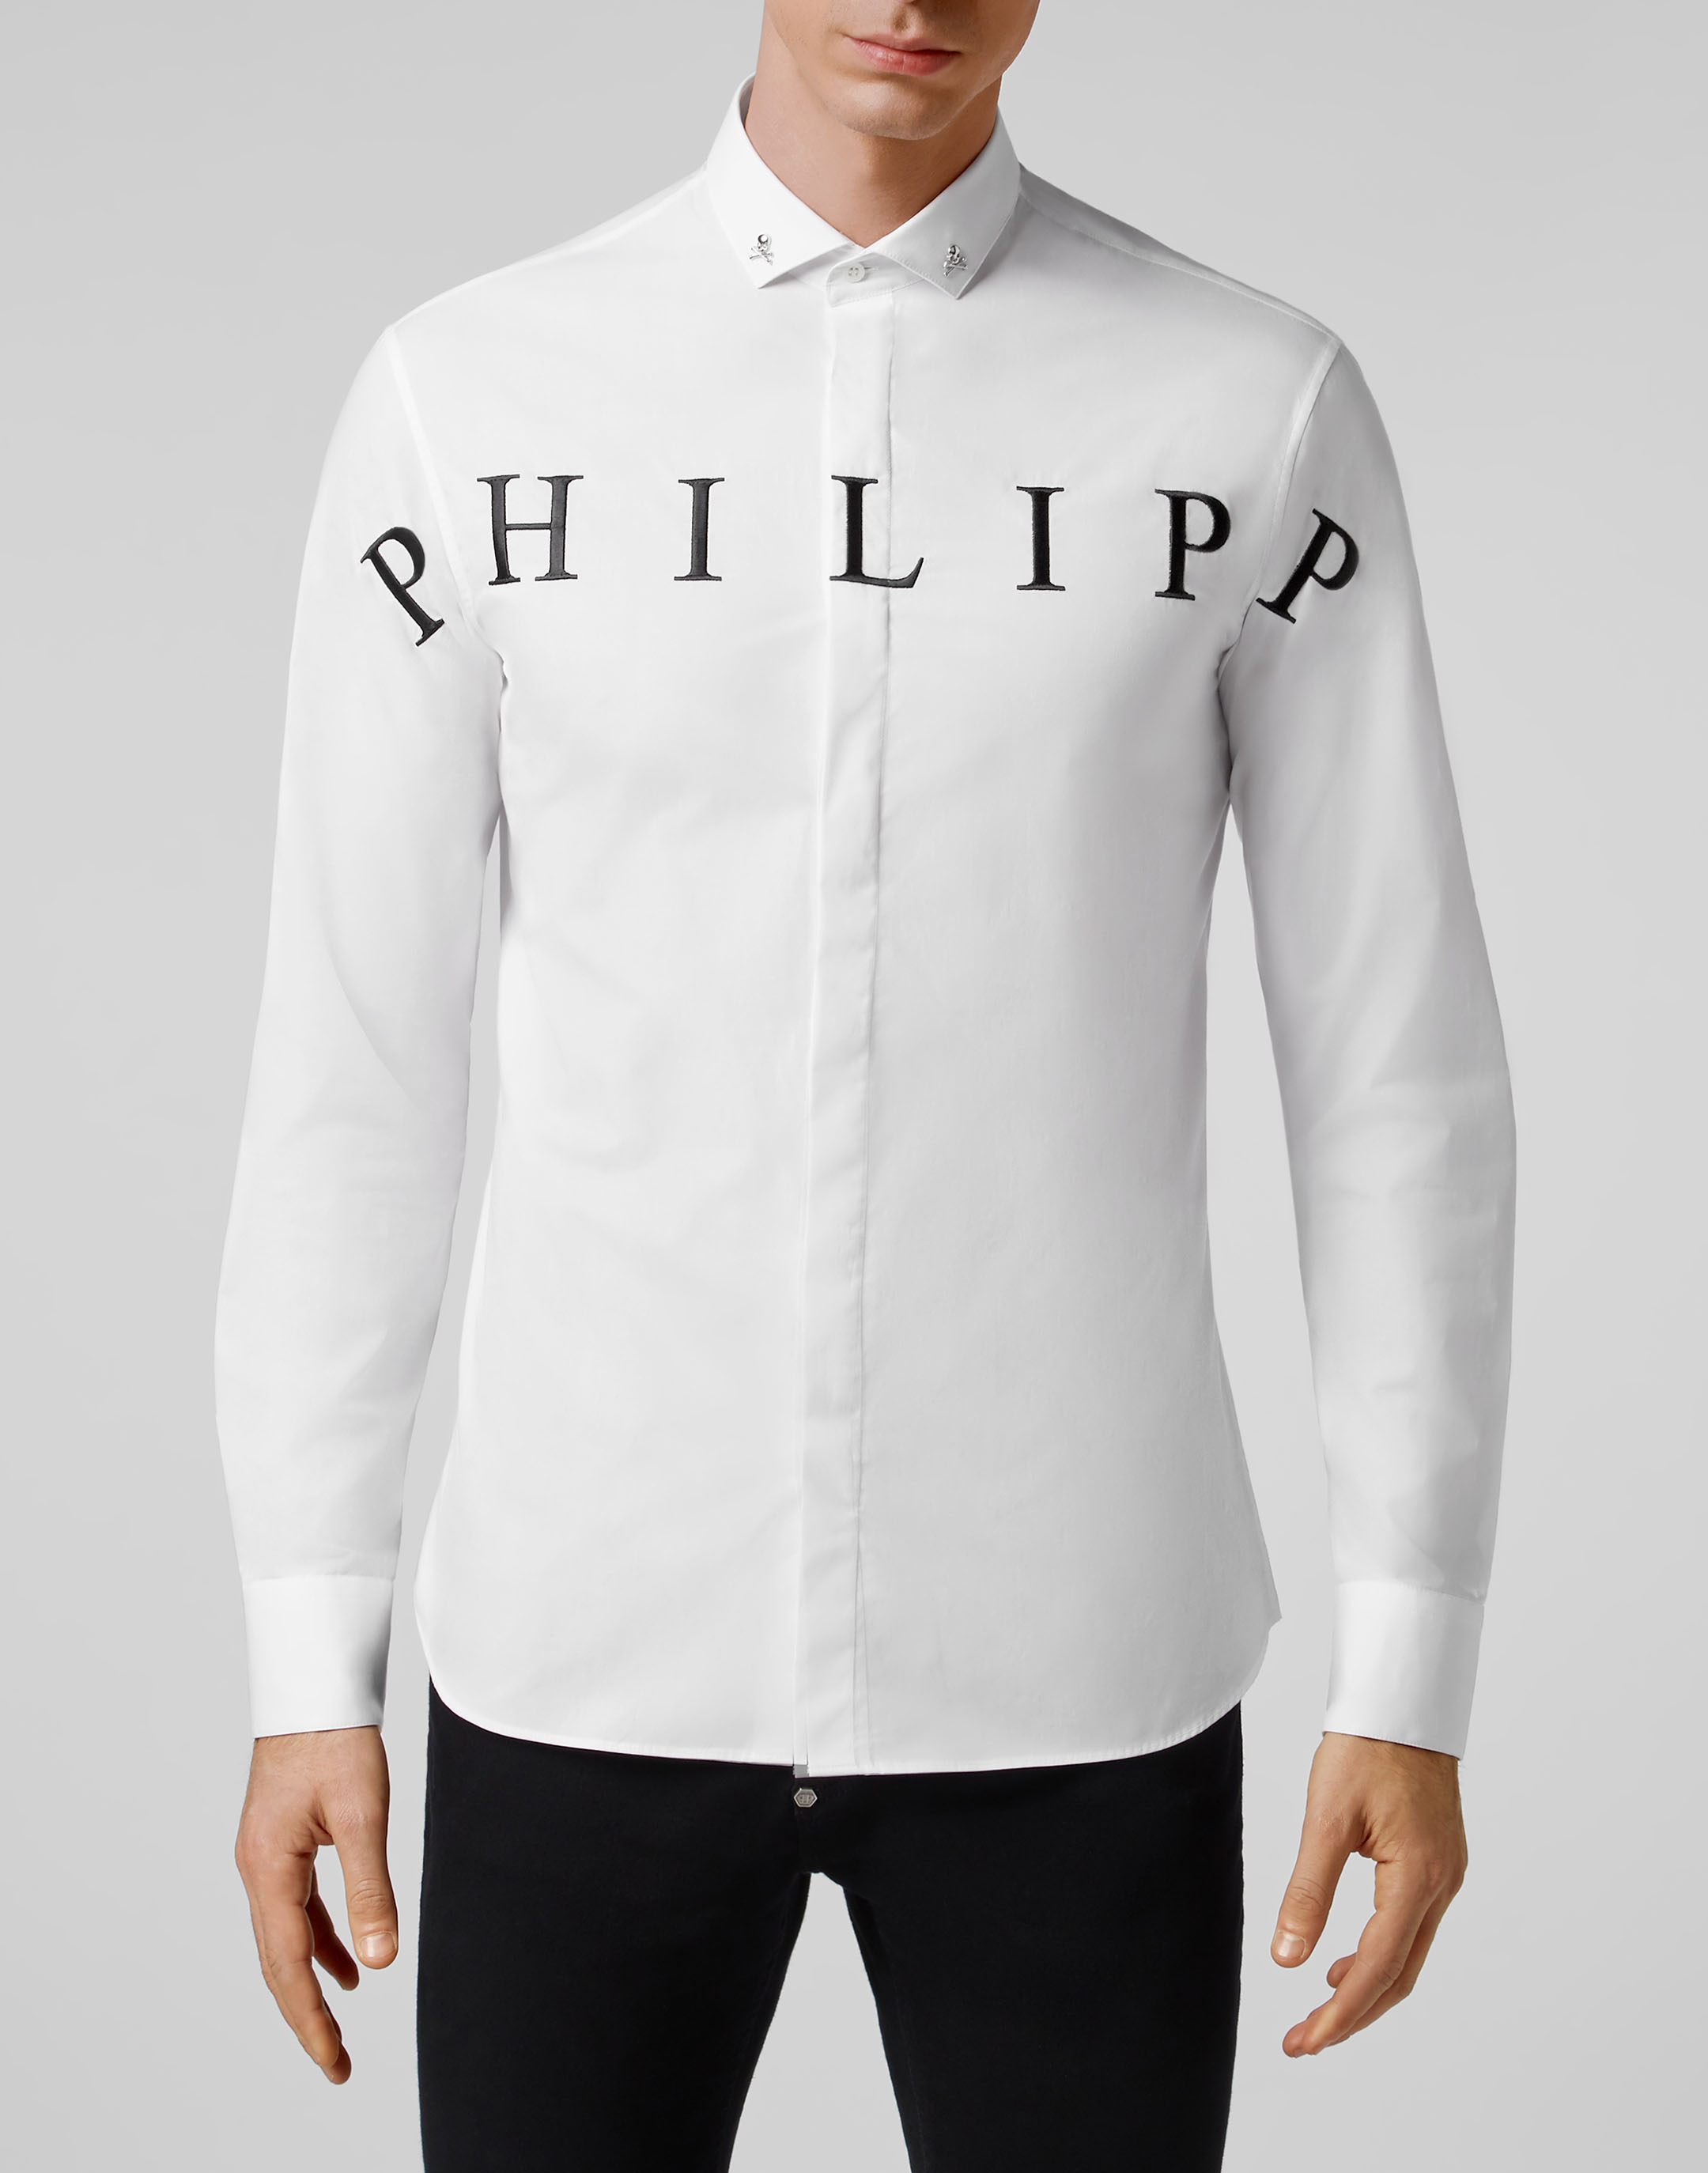 Shirt Diamond Cut LS Philipp Plein TM | Philipp Plein Outlet